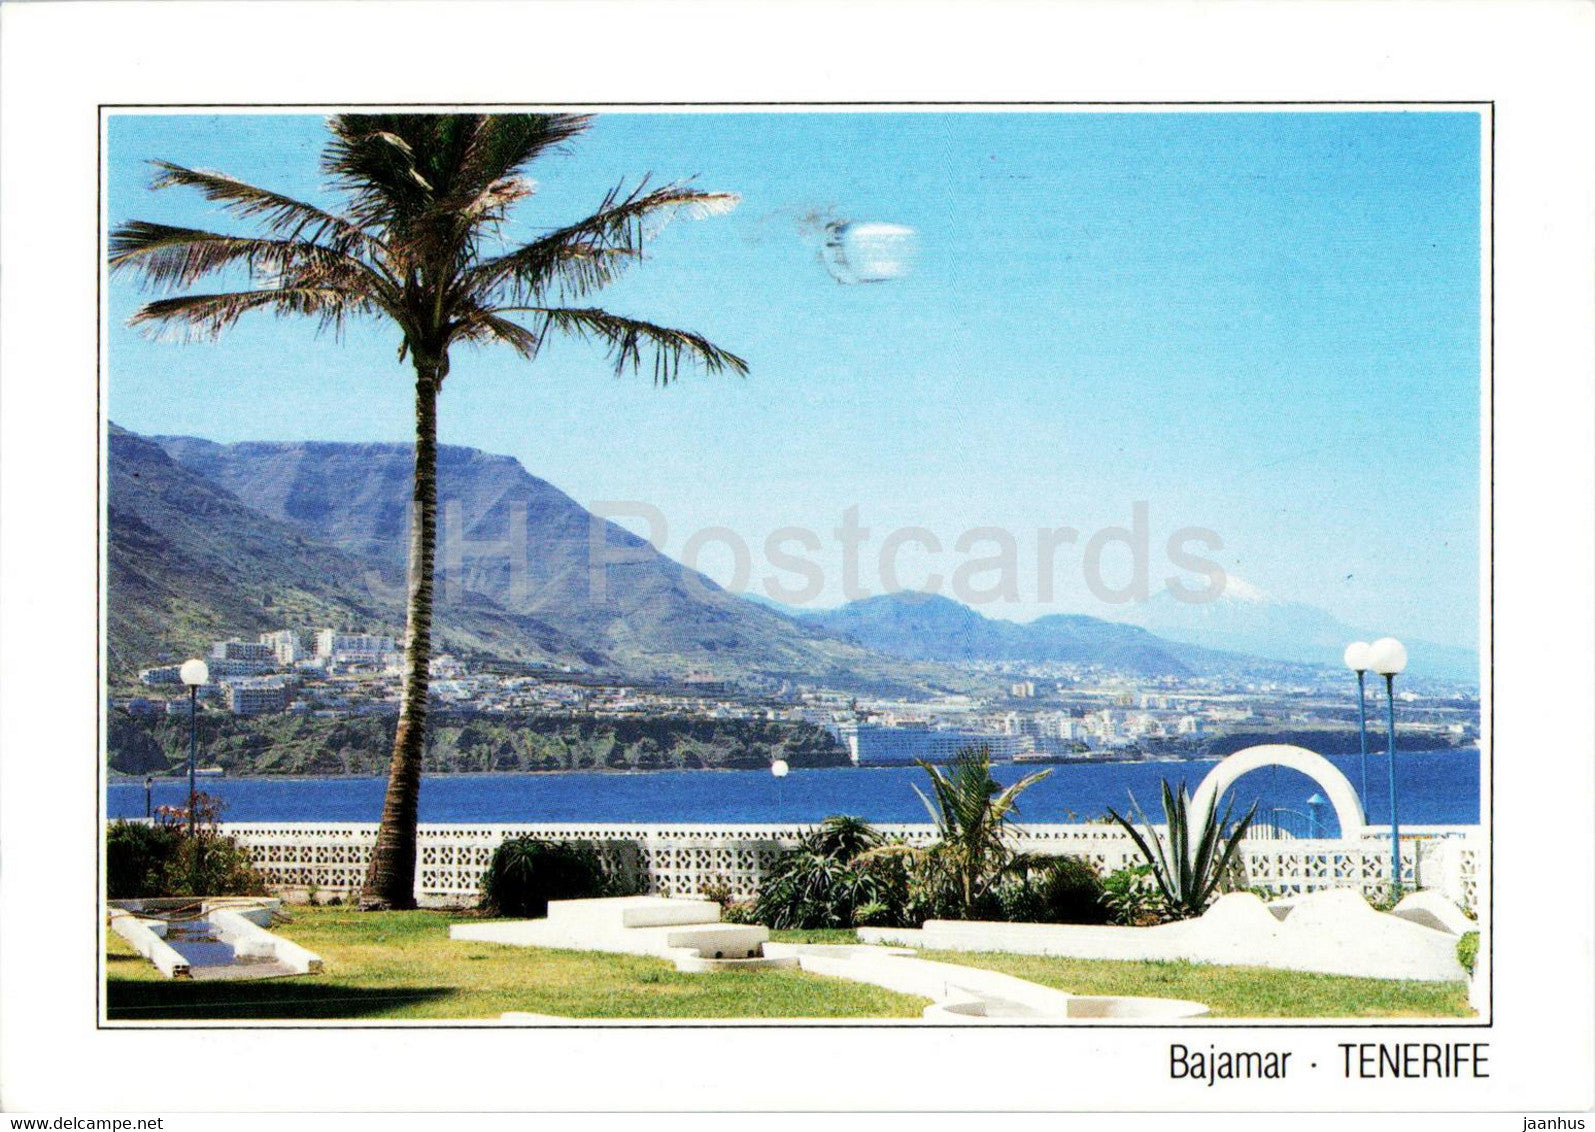 Bajamar - Tenerife - Islas Canarias - 192 - 1995 - Spain - used - JH Postcards